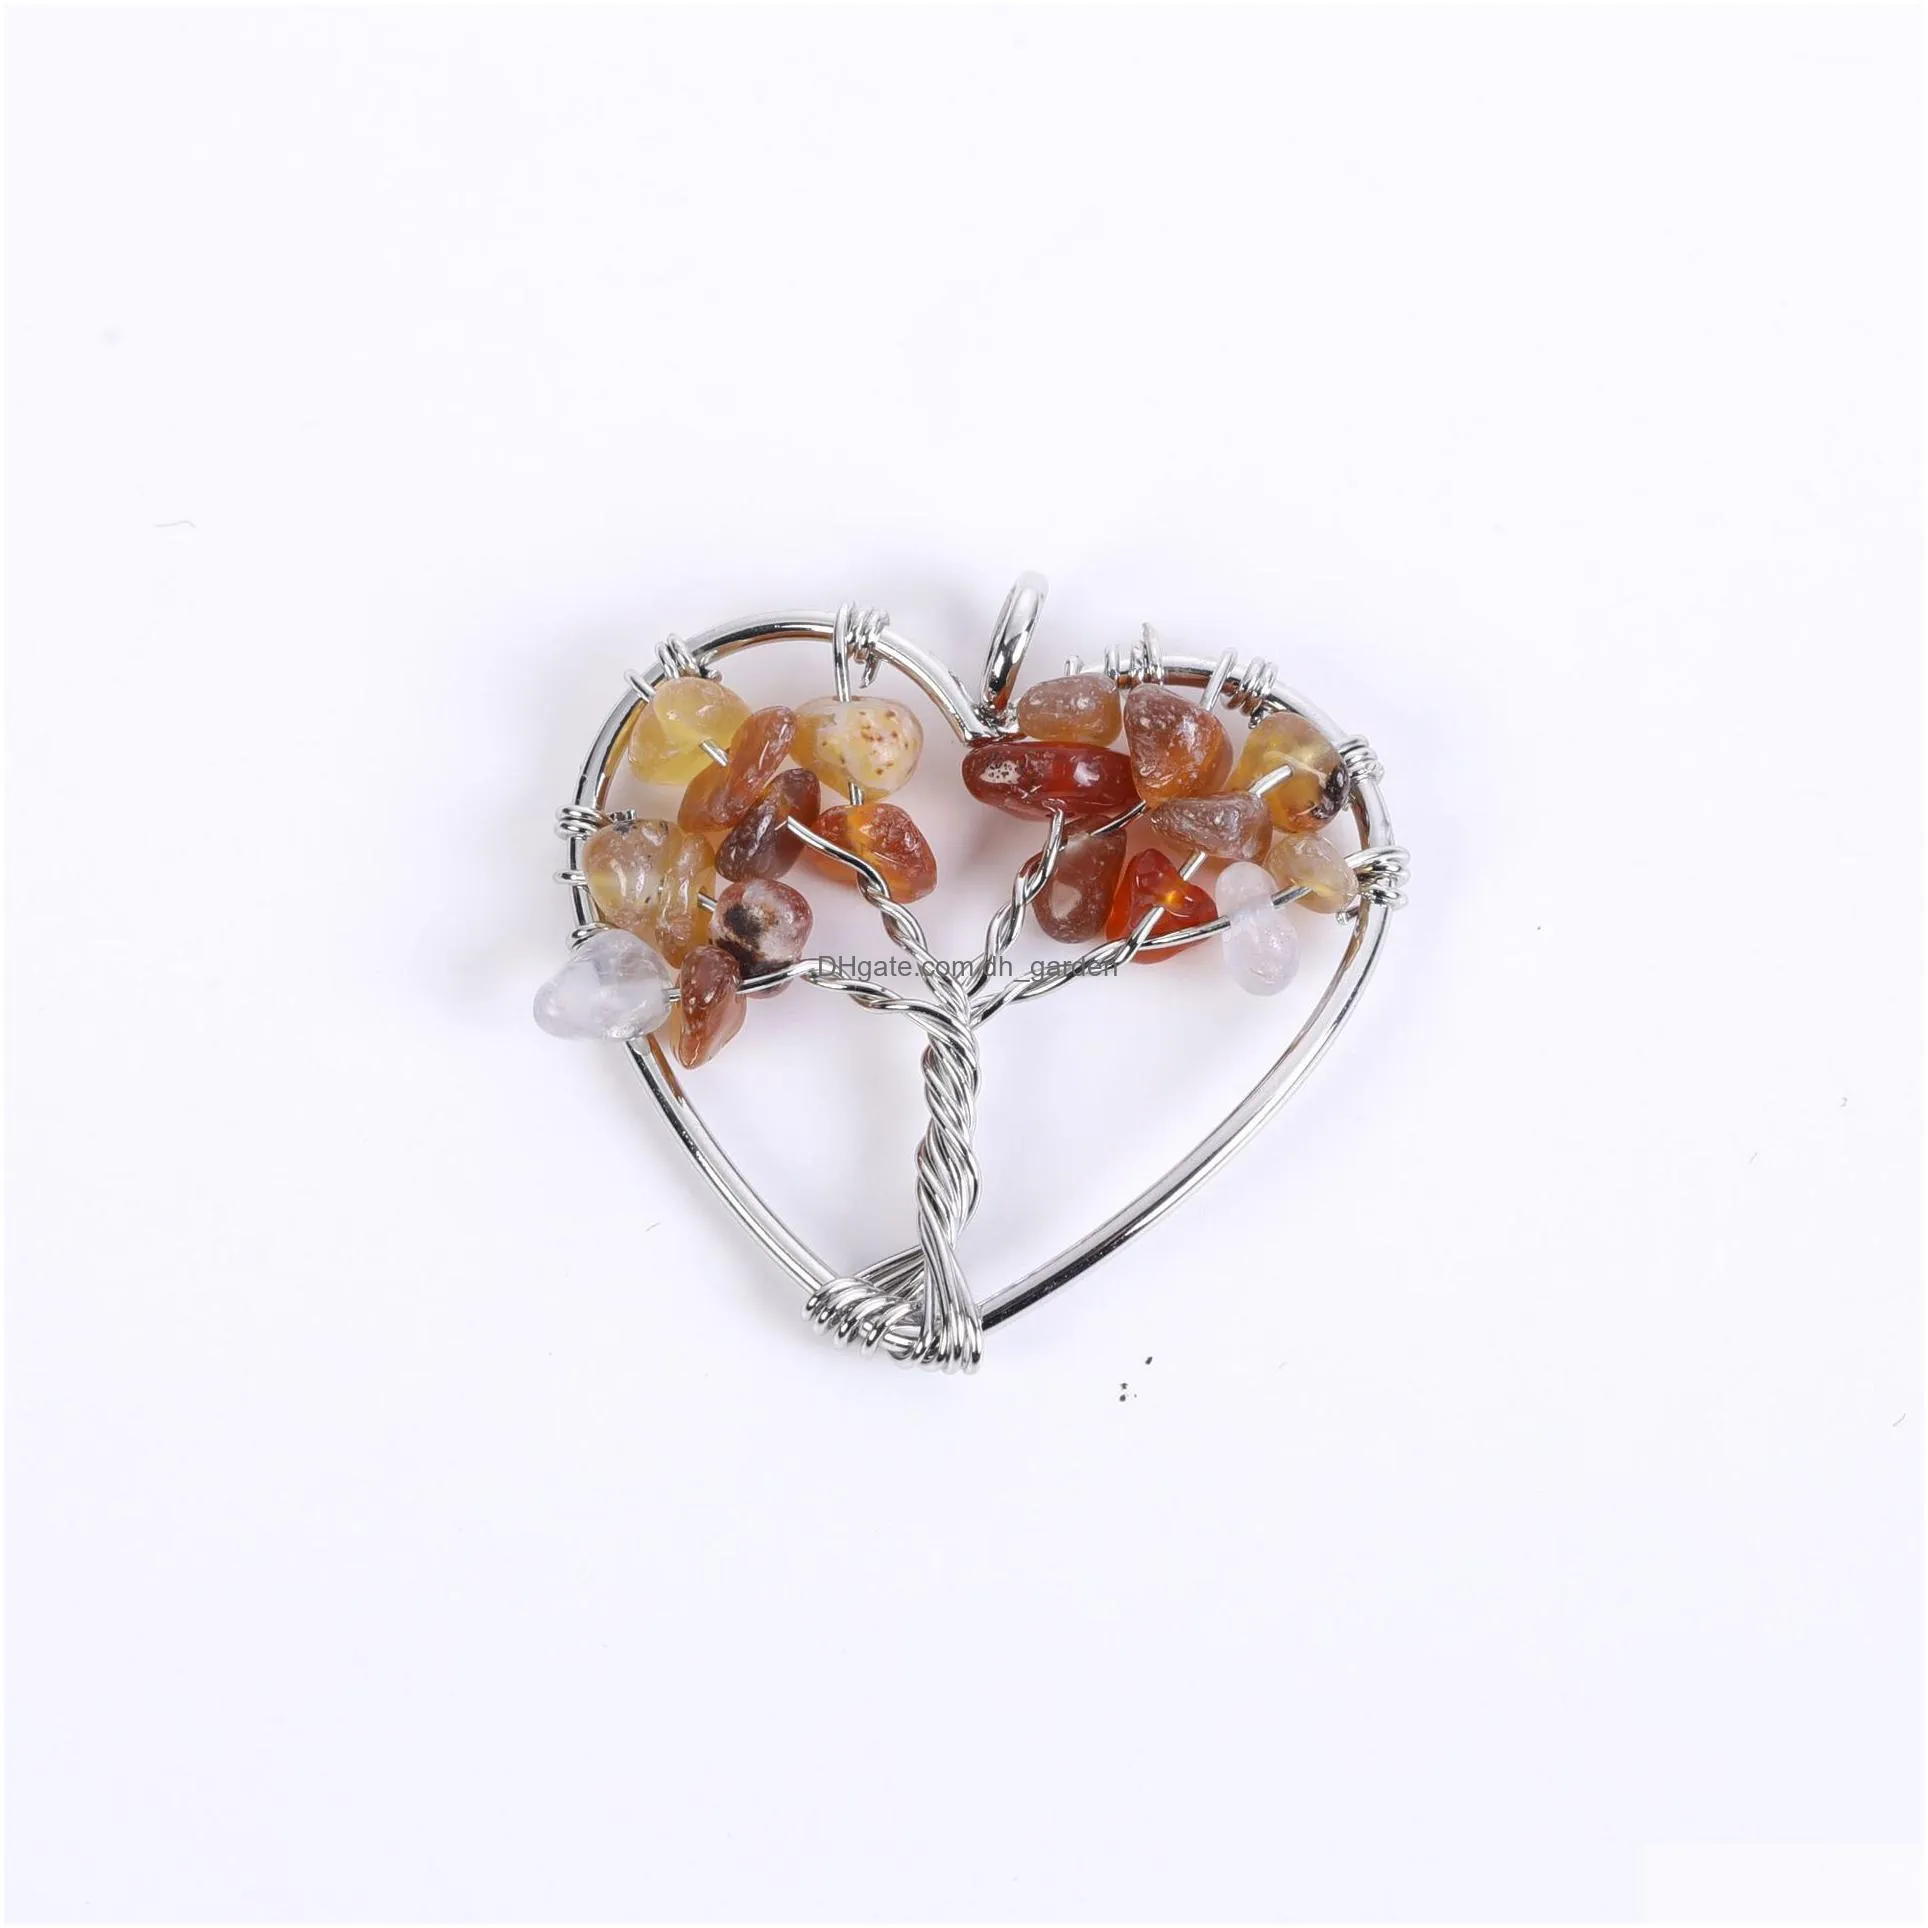 30mm rainbow tree of life natural amethyst crystal heart pendant necklace energy stone healing meditation yoga gift wholesale